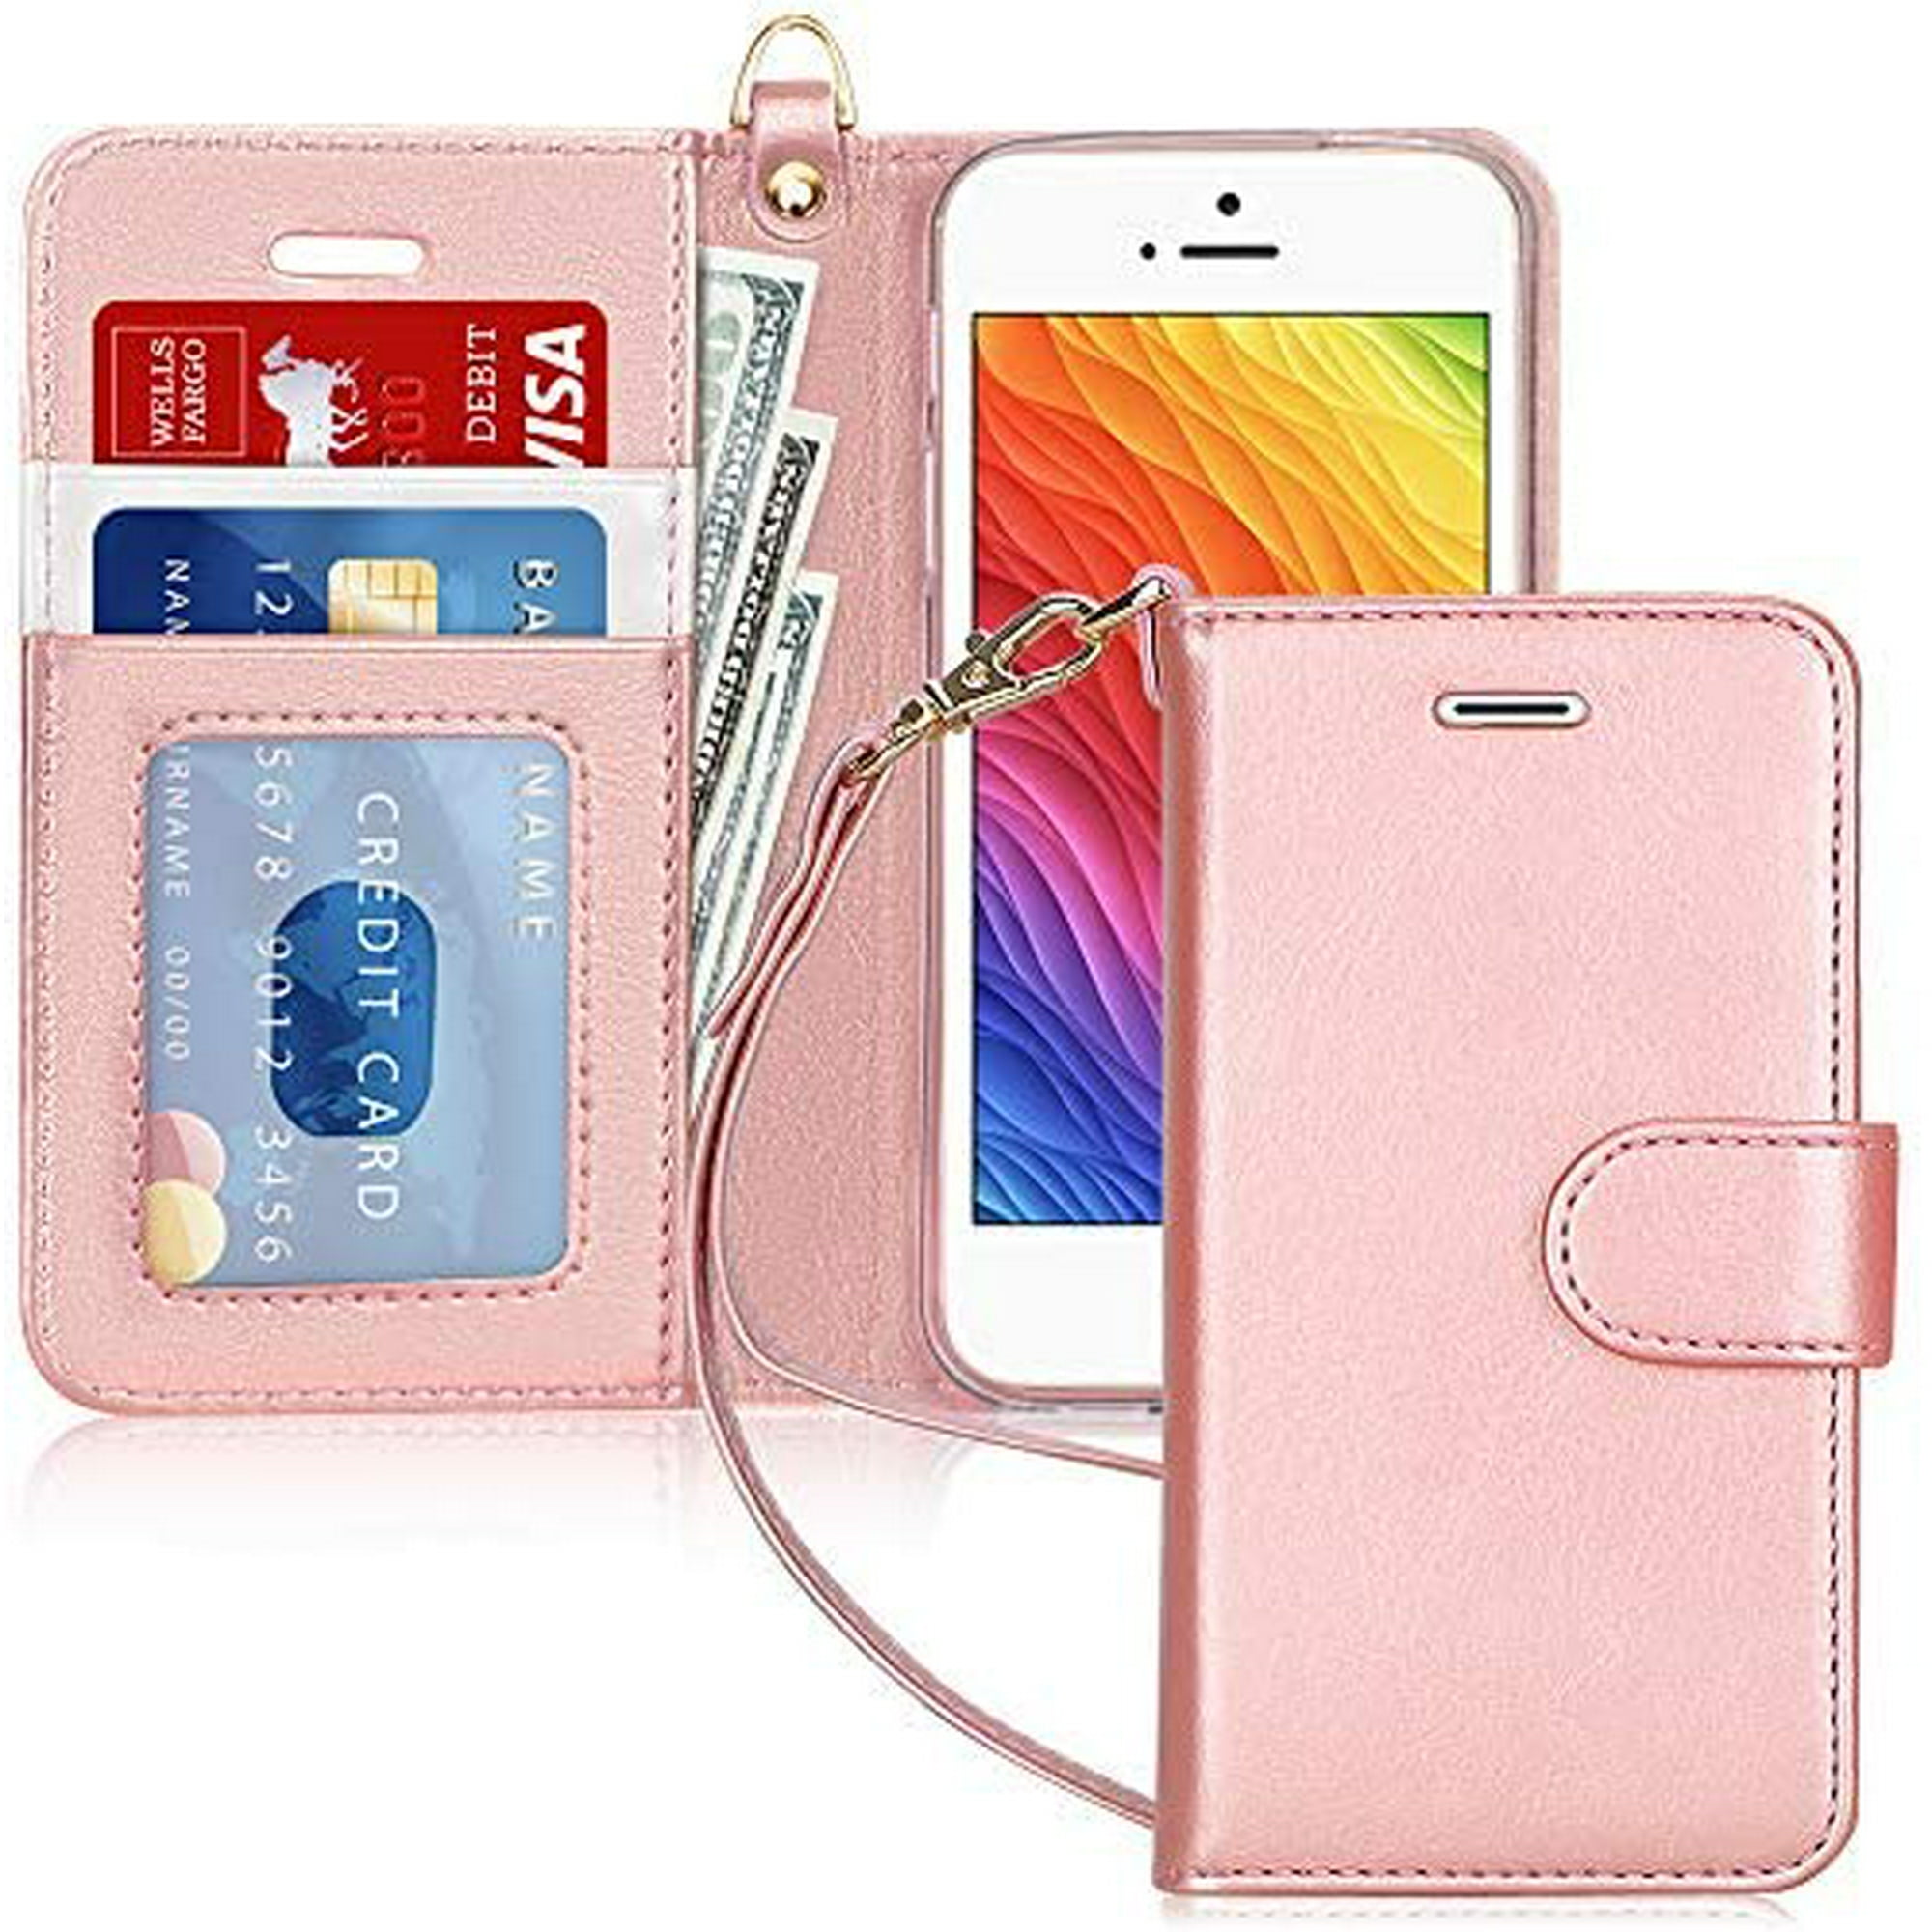 iPhone SE Case, iPhone 5S Case, iPhone 5 Case, Series] Premium PU Leather Wallet Flip Case Stand Cover | Walmart